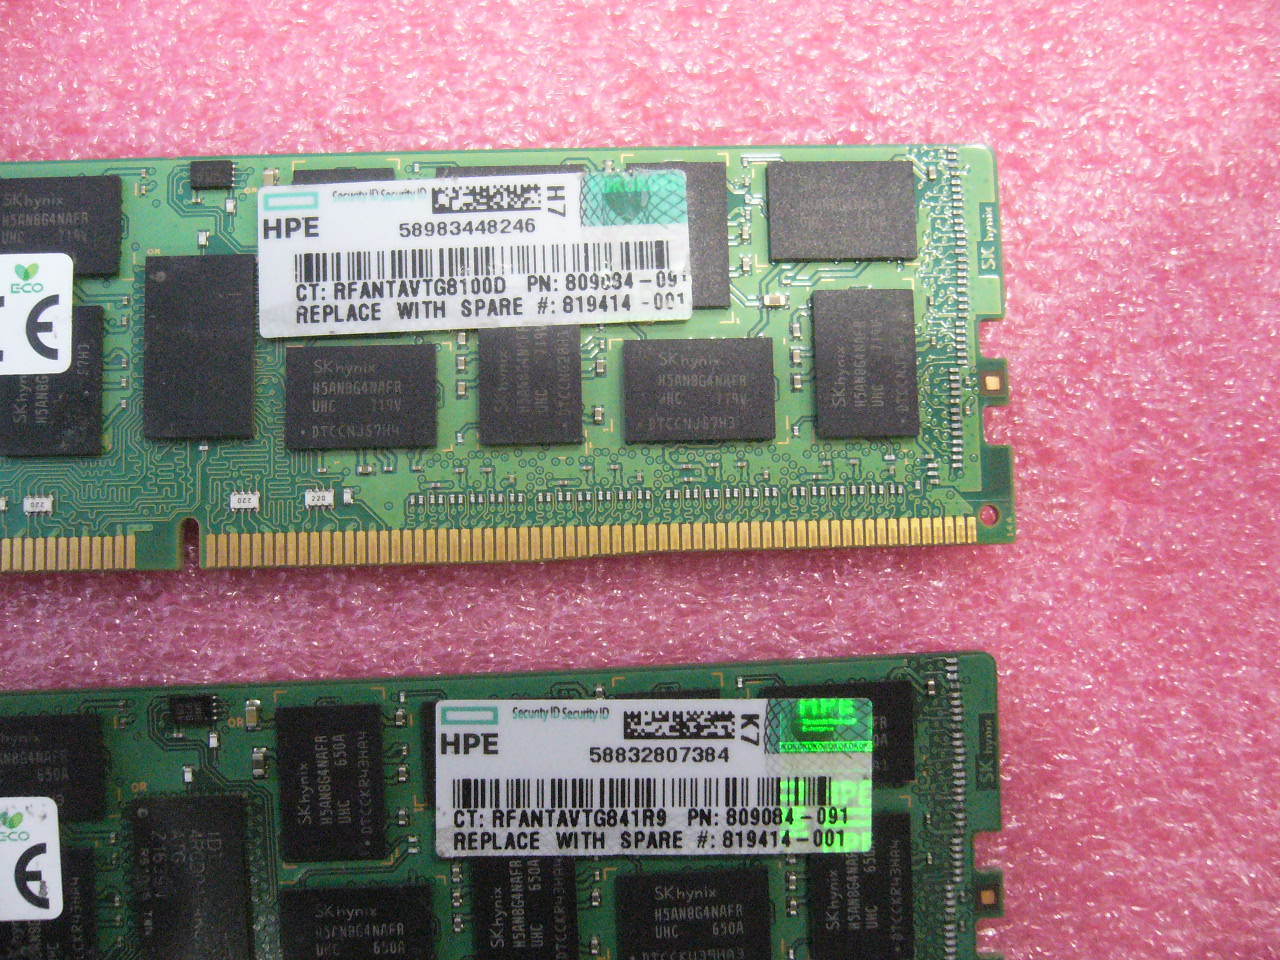 QTY 1x 32GB DDR4 2Rx4 PC4-2400T-LB0 ECC Registered memory SK Hynix HP 809084-091 - zum Schließen ins Bild klicken